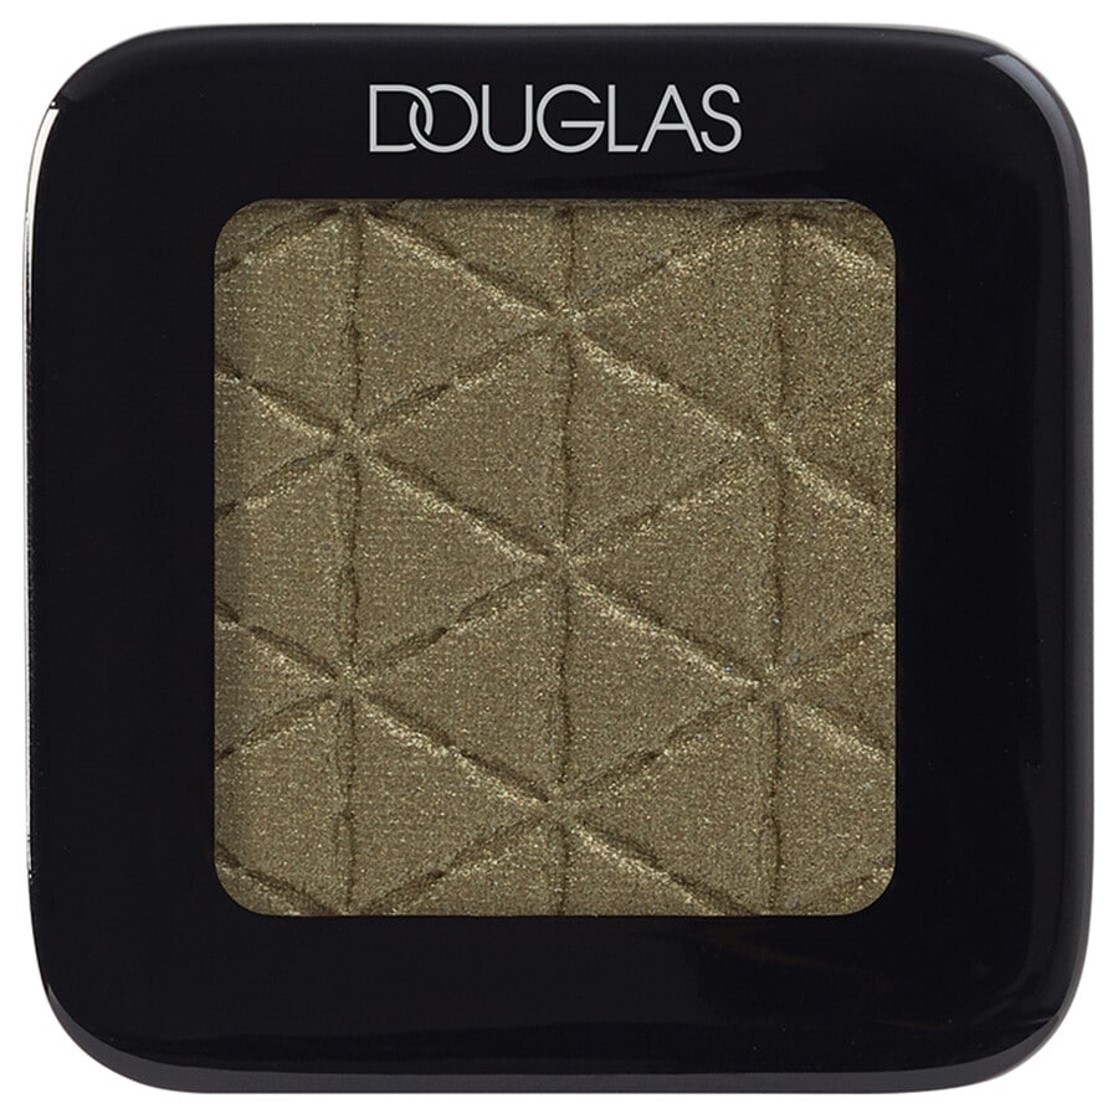 Douglas Collection - Eyeshadow Mono Iridescent - 120